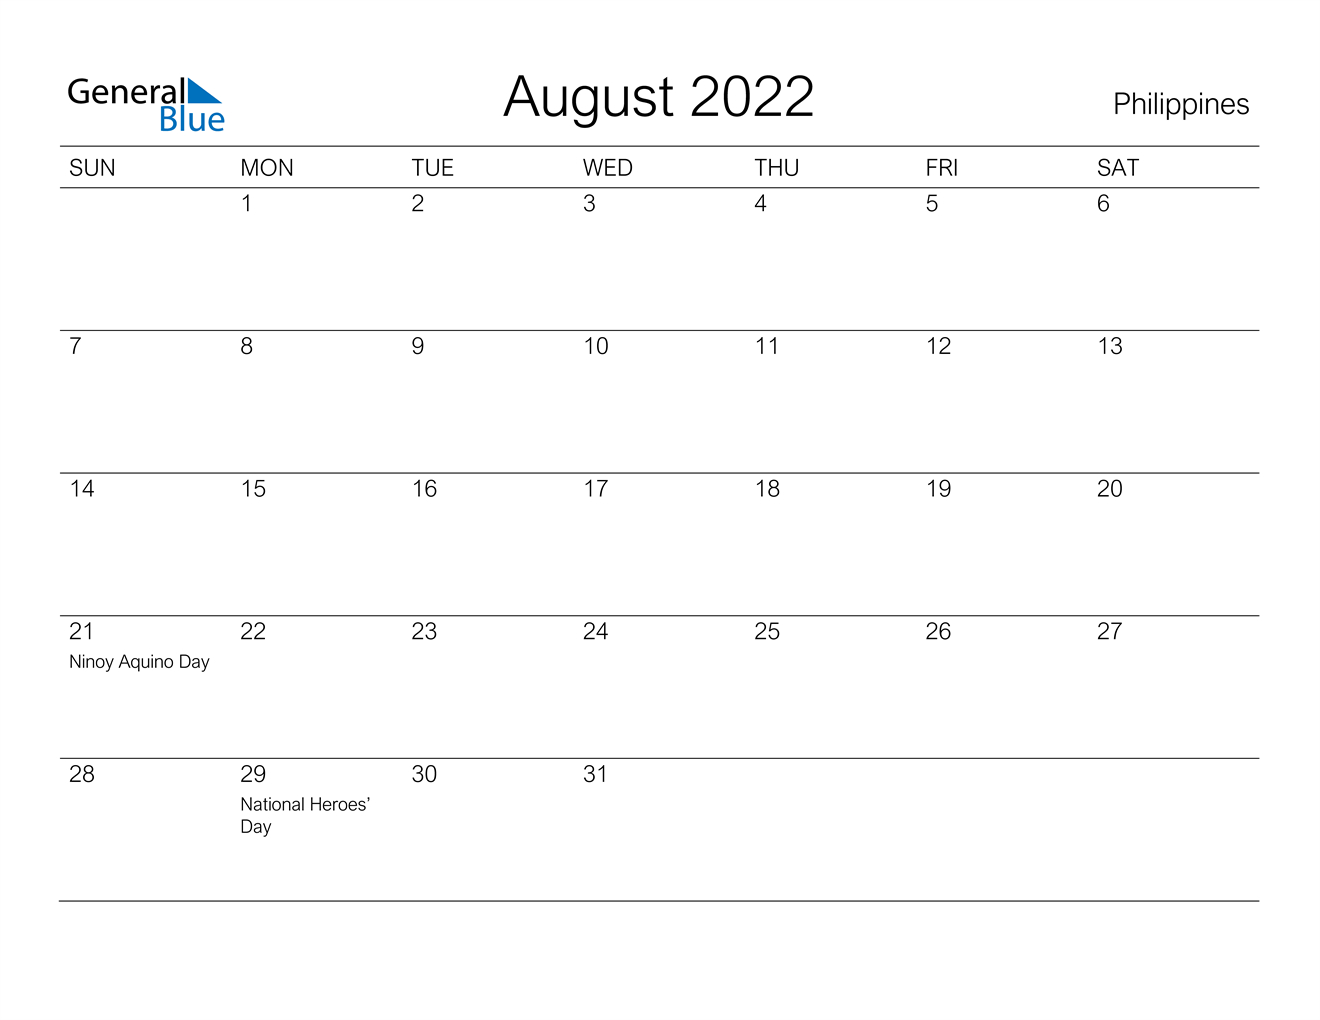 August 2022 Calendar - Philippines